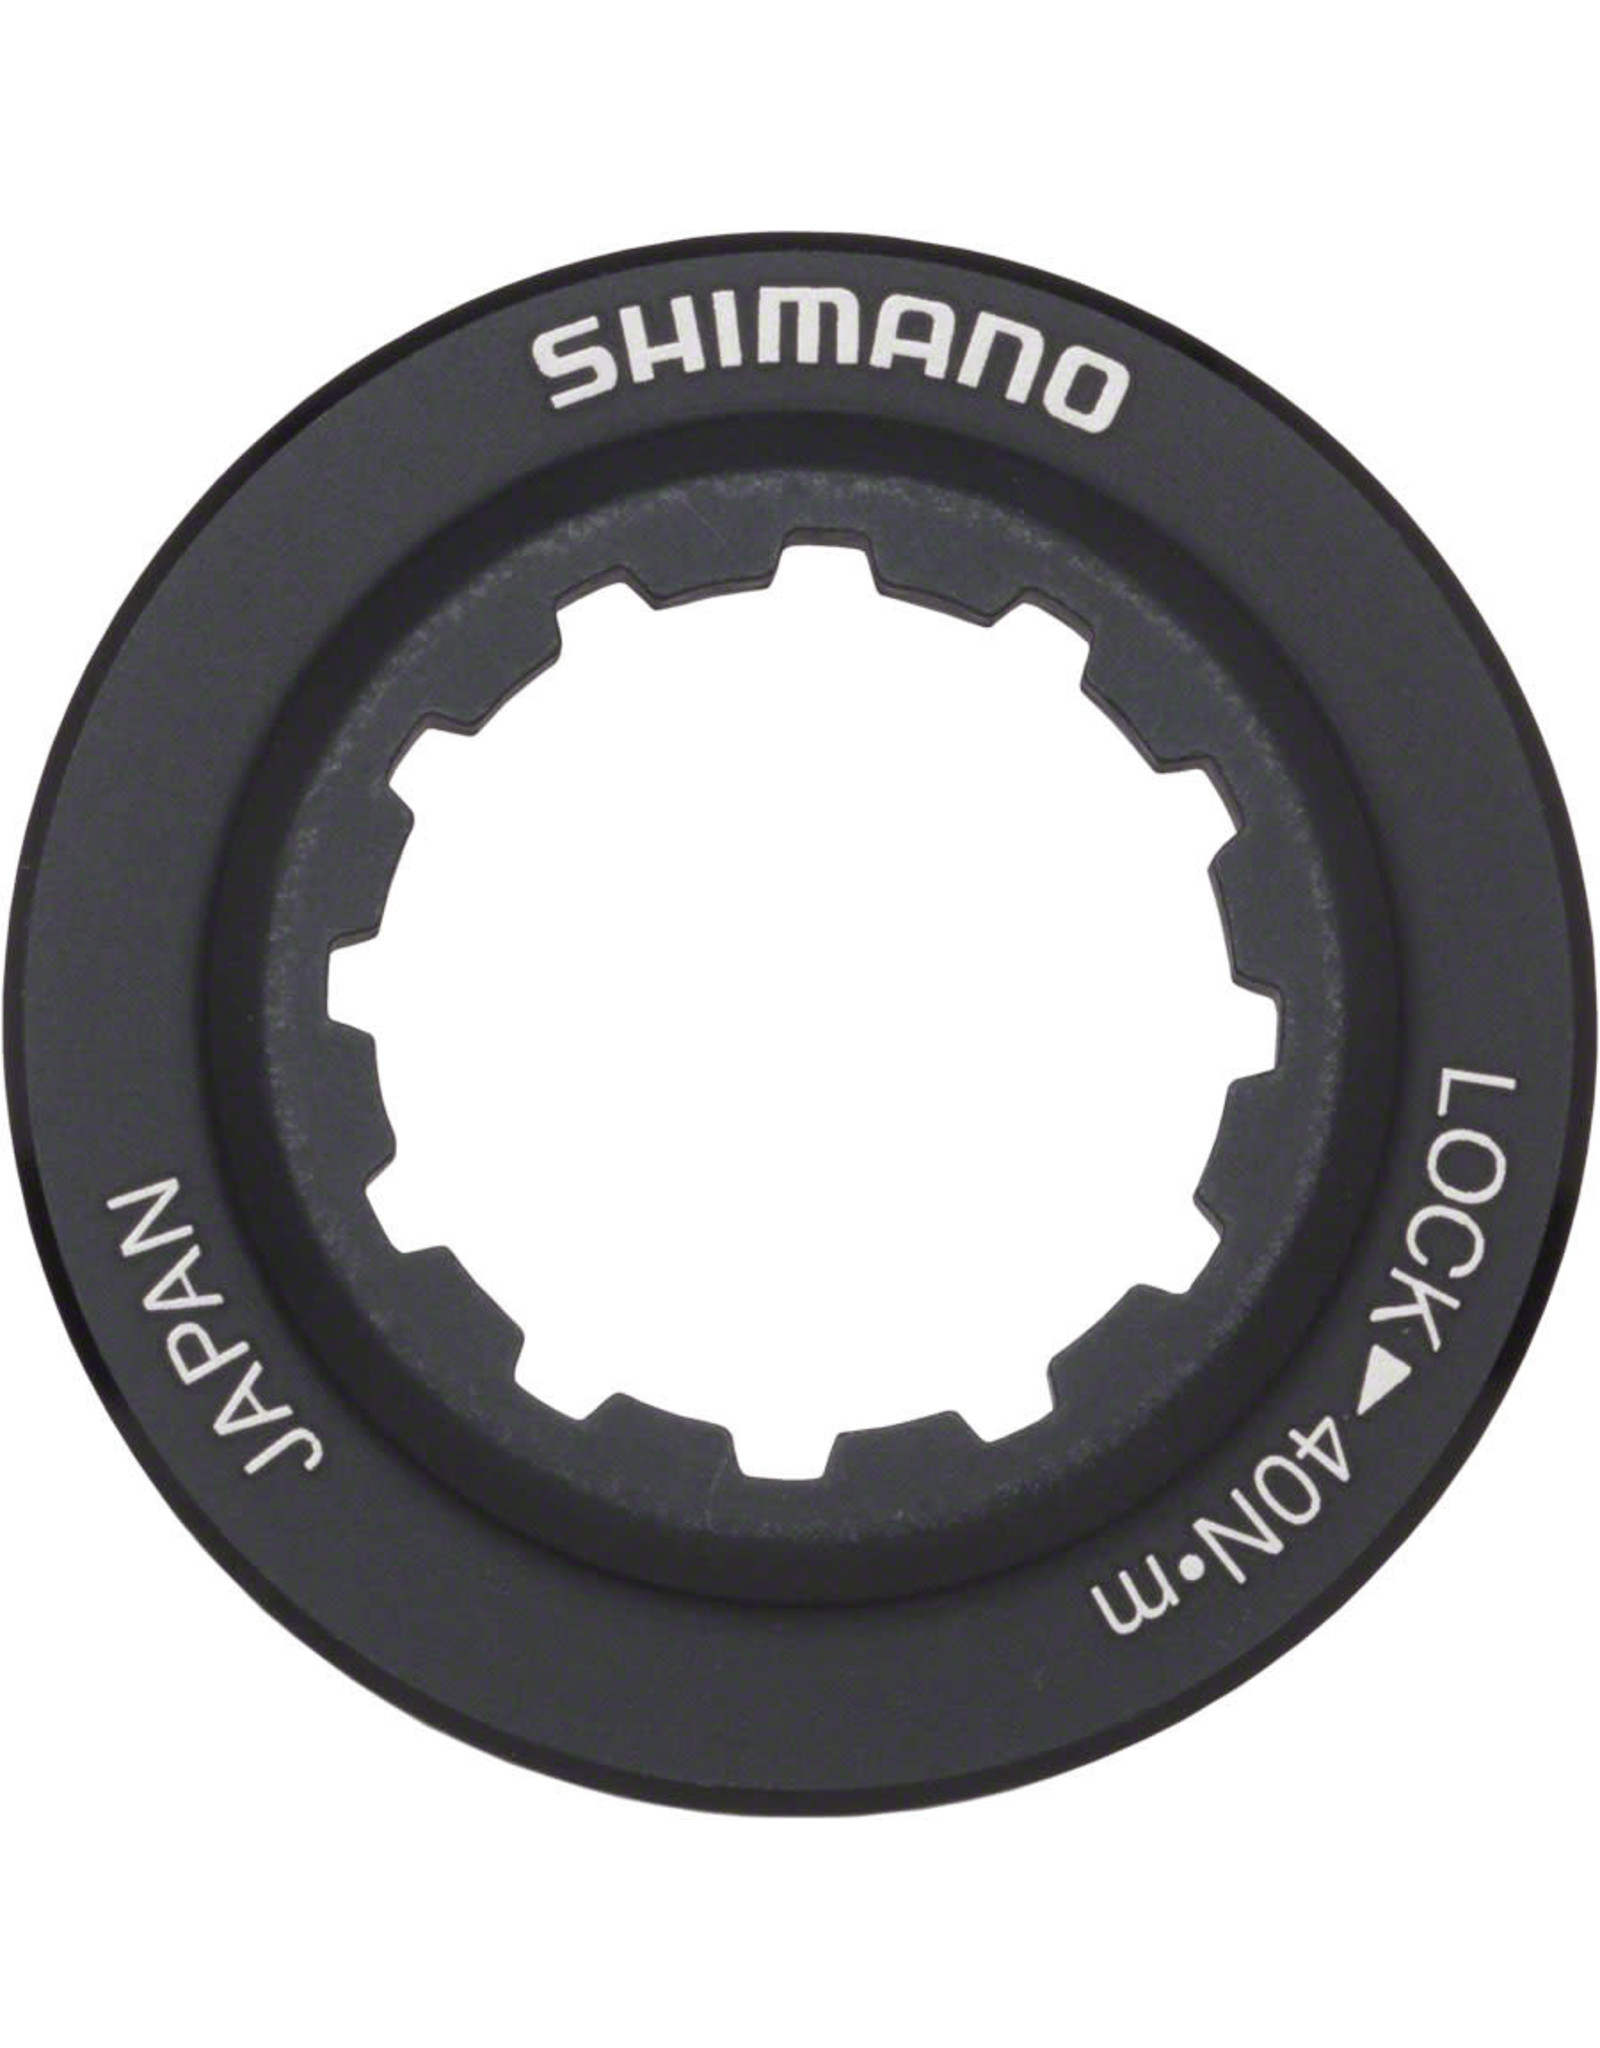 Shimano Shimano RT98 Centerlock Disc Rotor Lockring Black/Alloy, for 9/10mm Axle